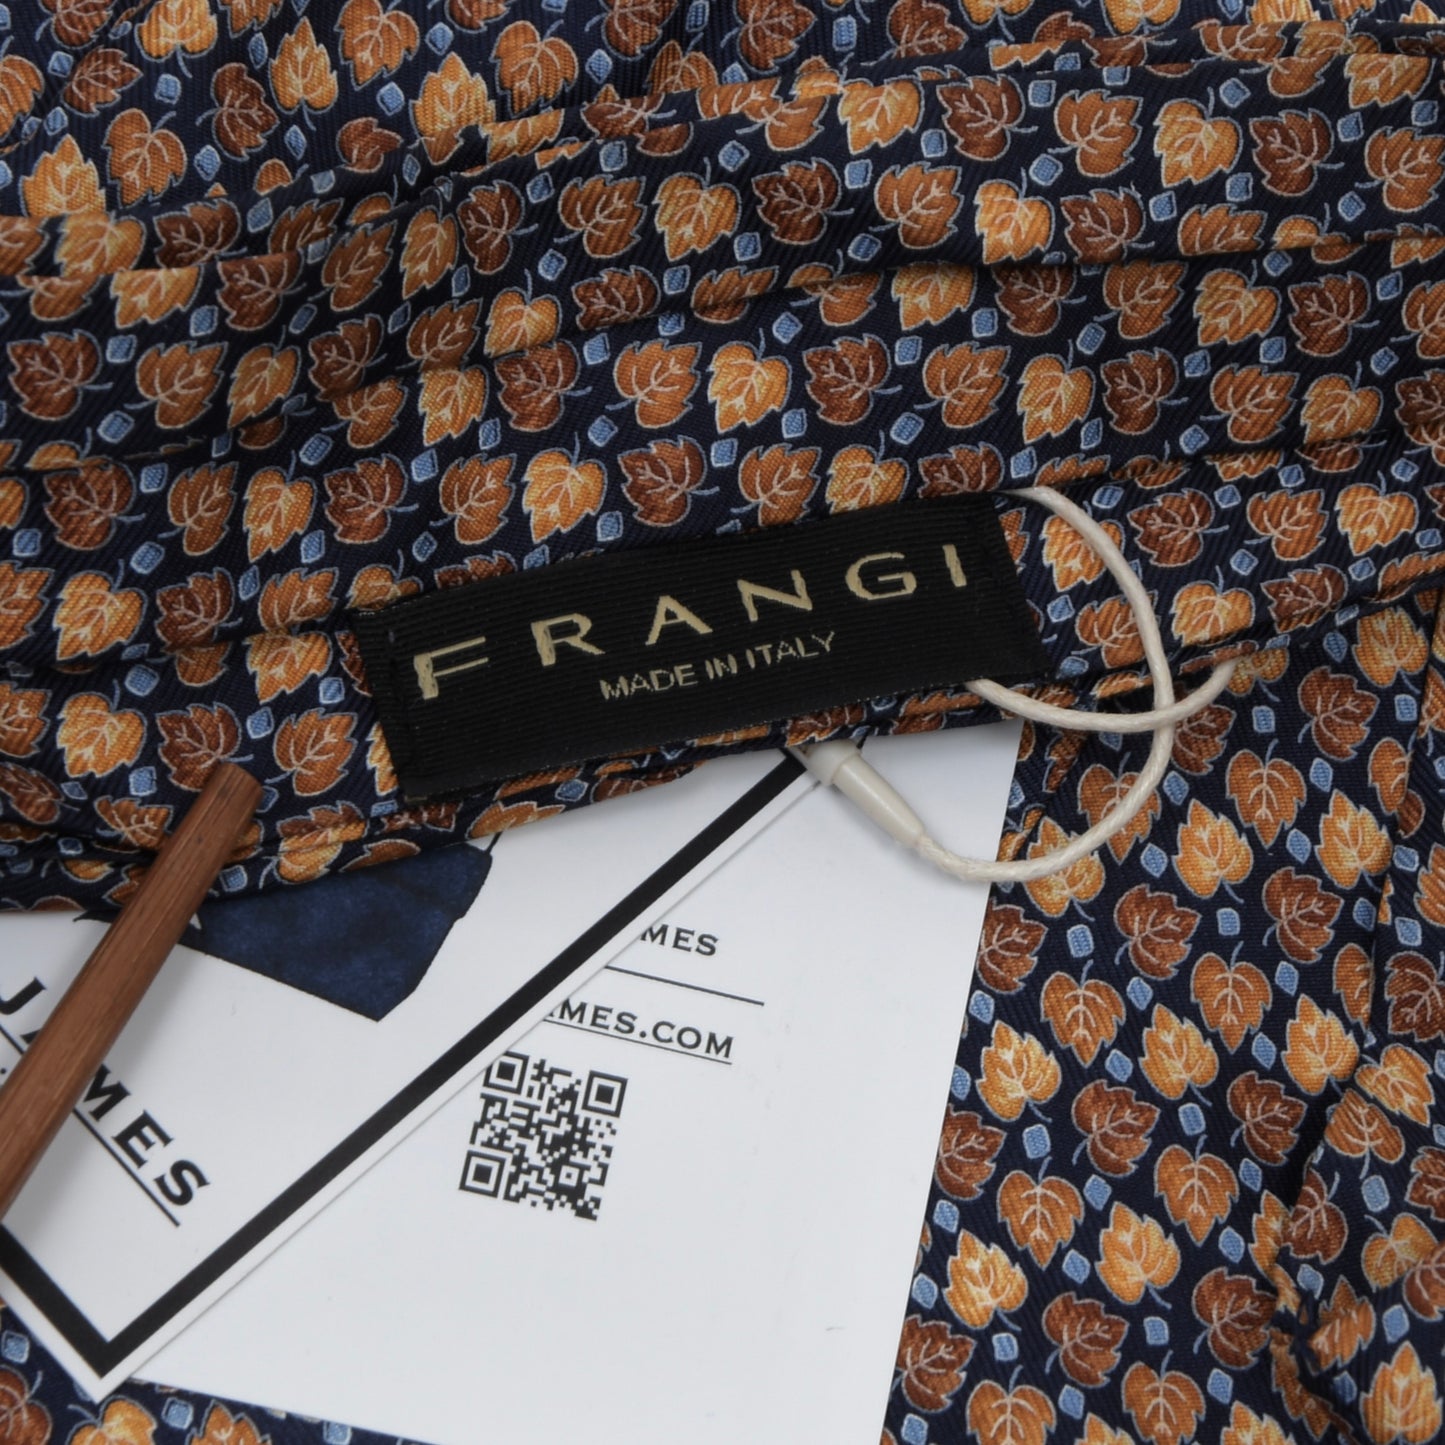 Frangi Silk Ascot/Cravat - Leaf Print